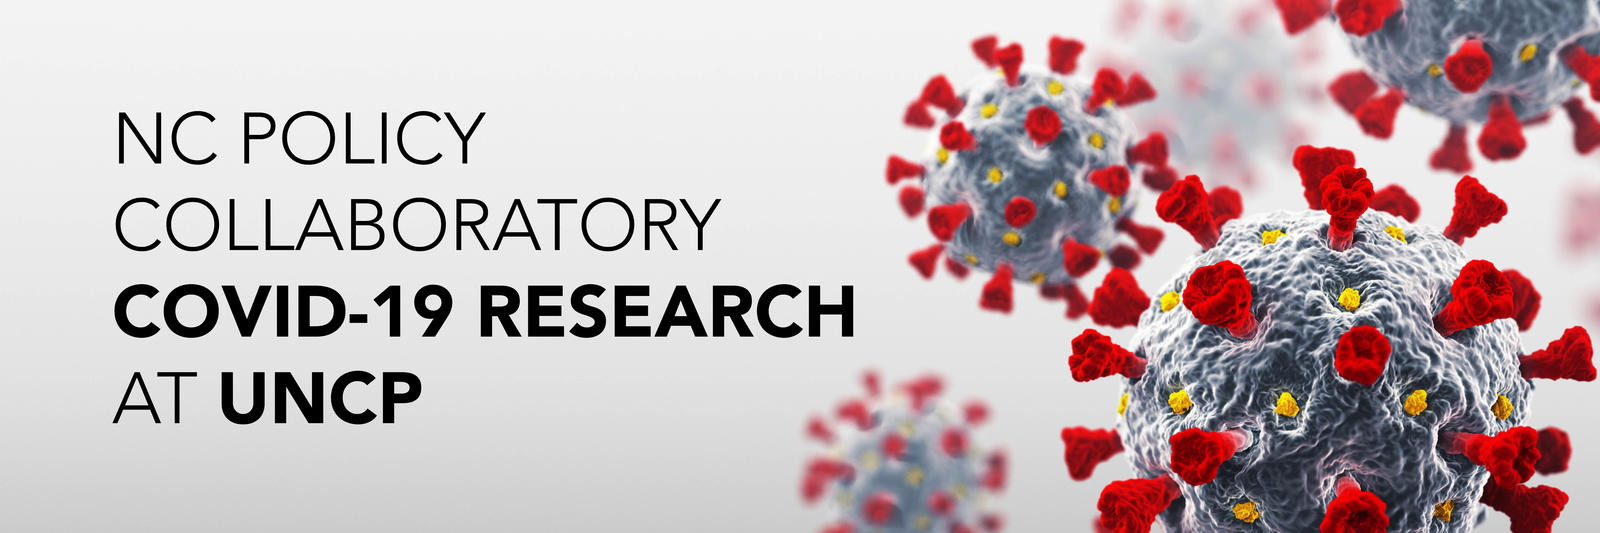 Coronavirus image-nc policy collaboratory covid 19 research